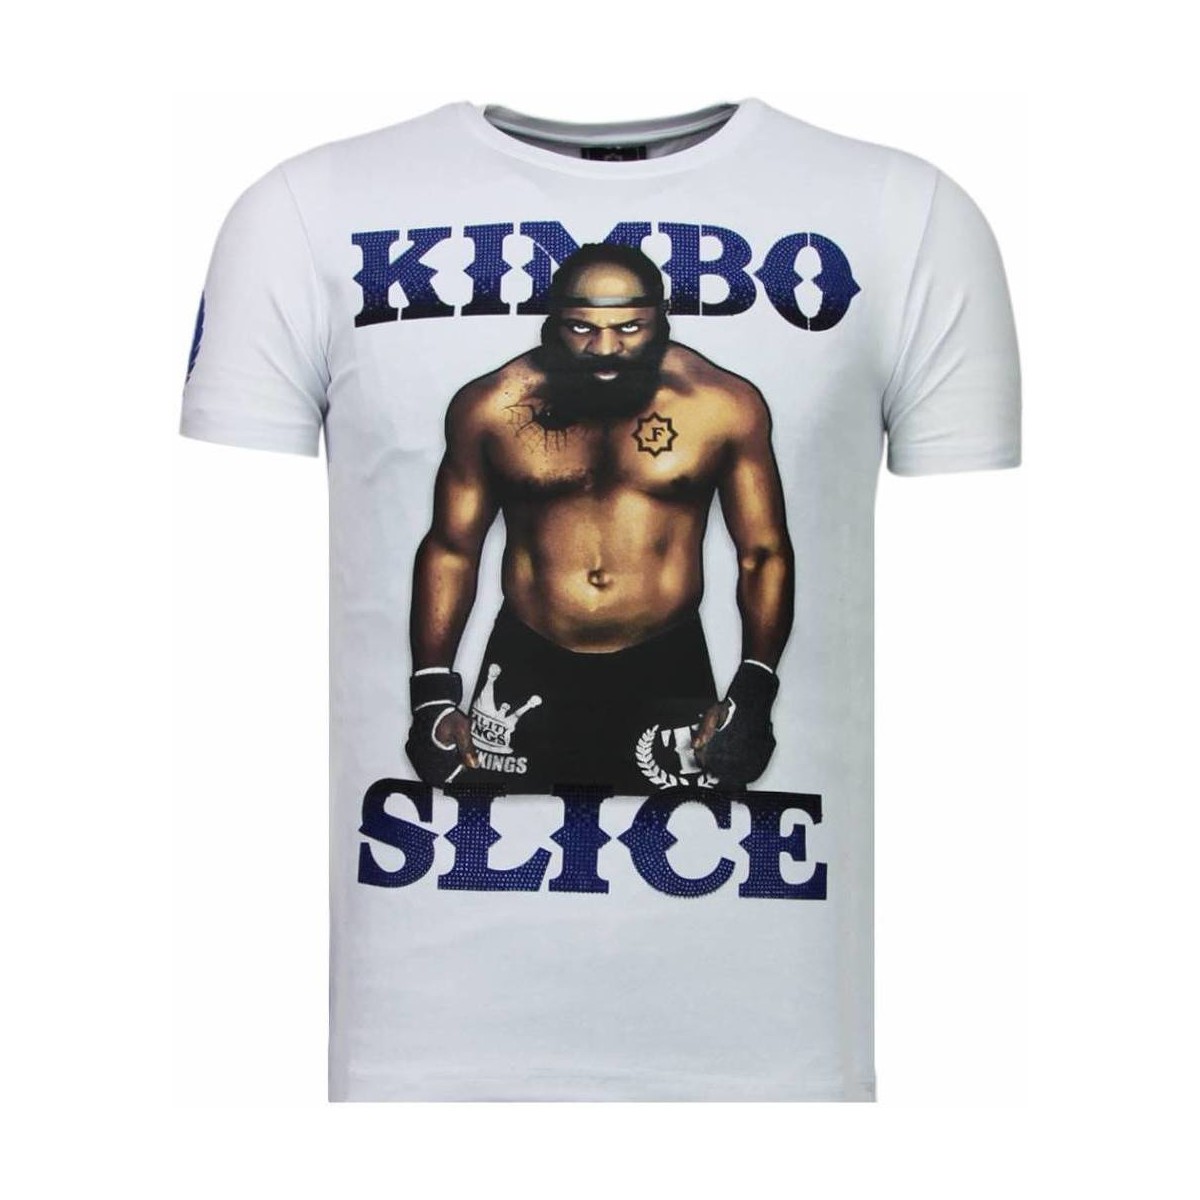 textil Herr T-shirts Local Fanatic Kimbo Slice Rhinestone Vit